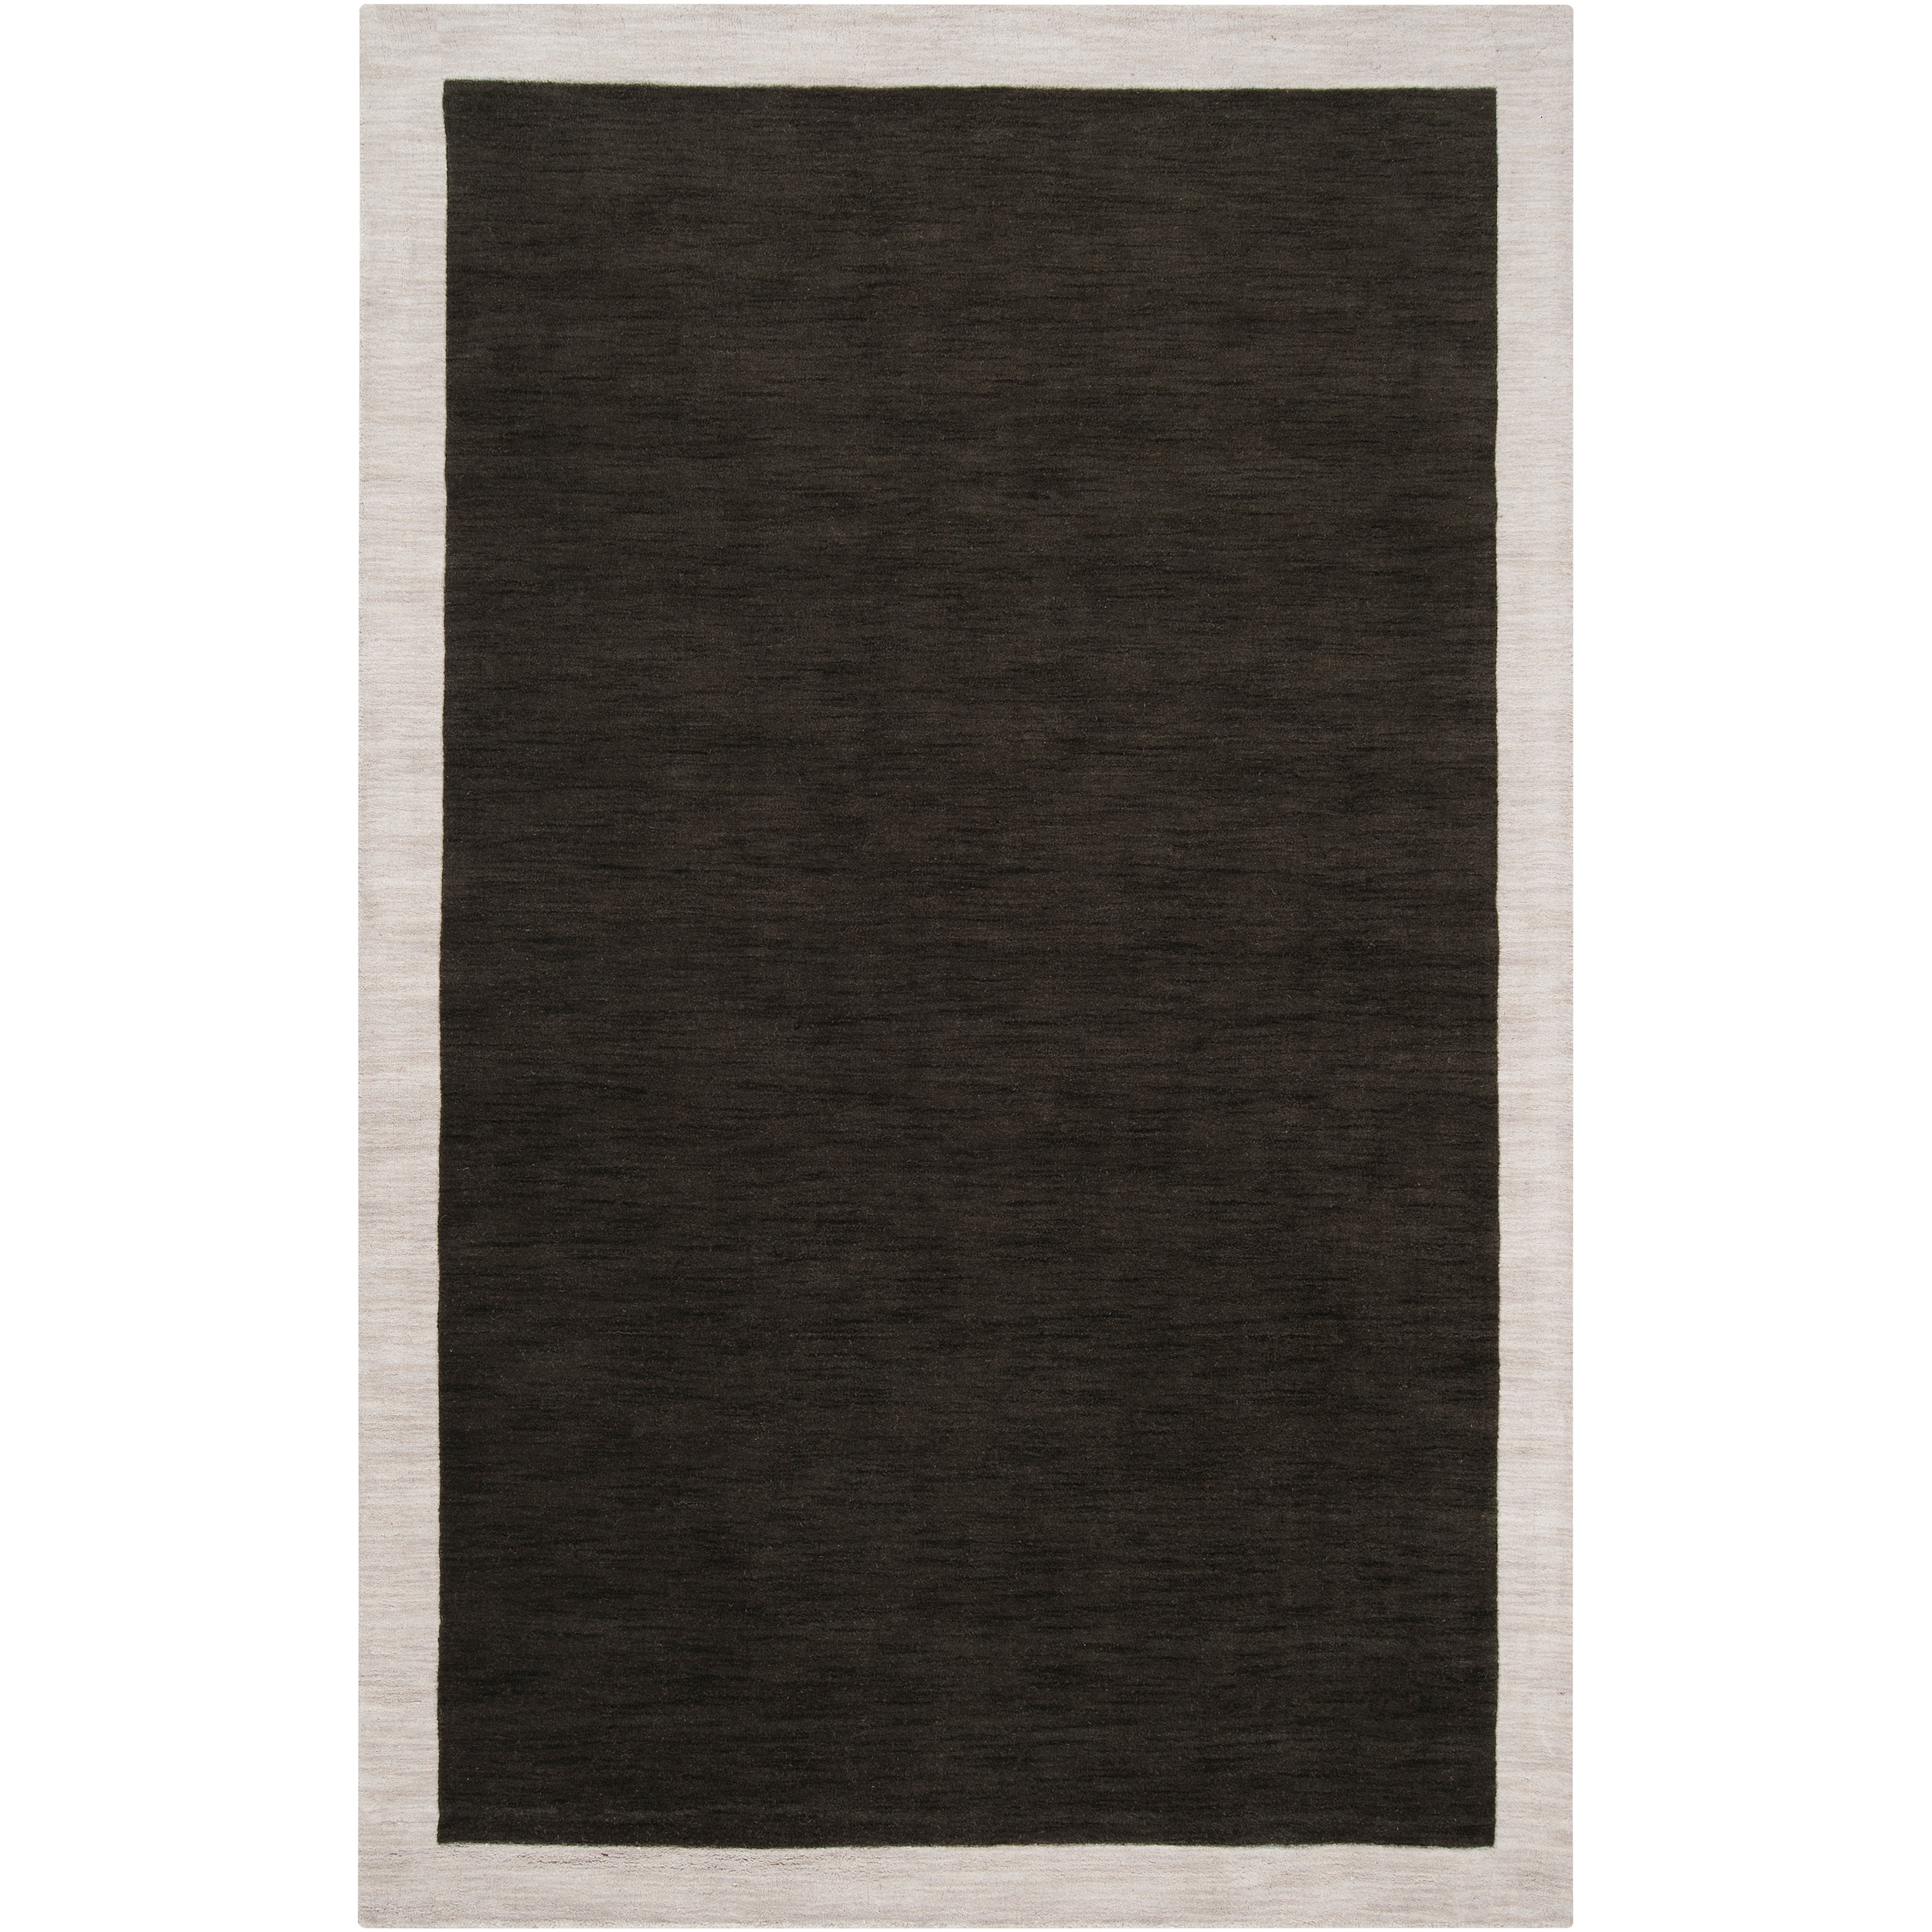 Angelohome Loomed Black Madison Square Wool Rug (8 X 10)